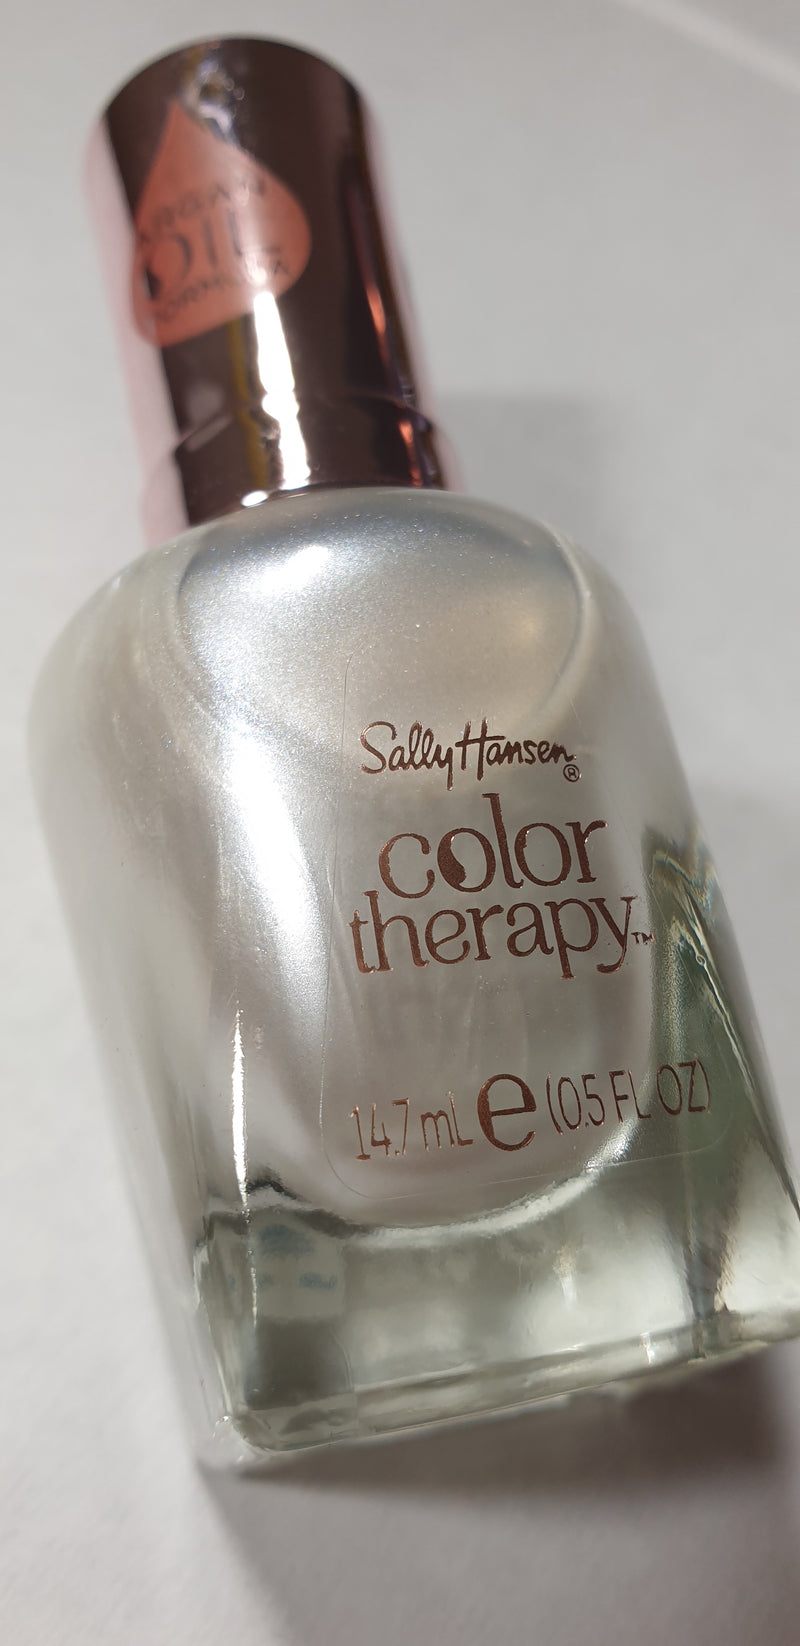 Sally Hansen Color Therapy Nail Polish 14.7mL 111 Fluer-t